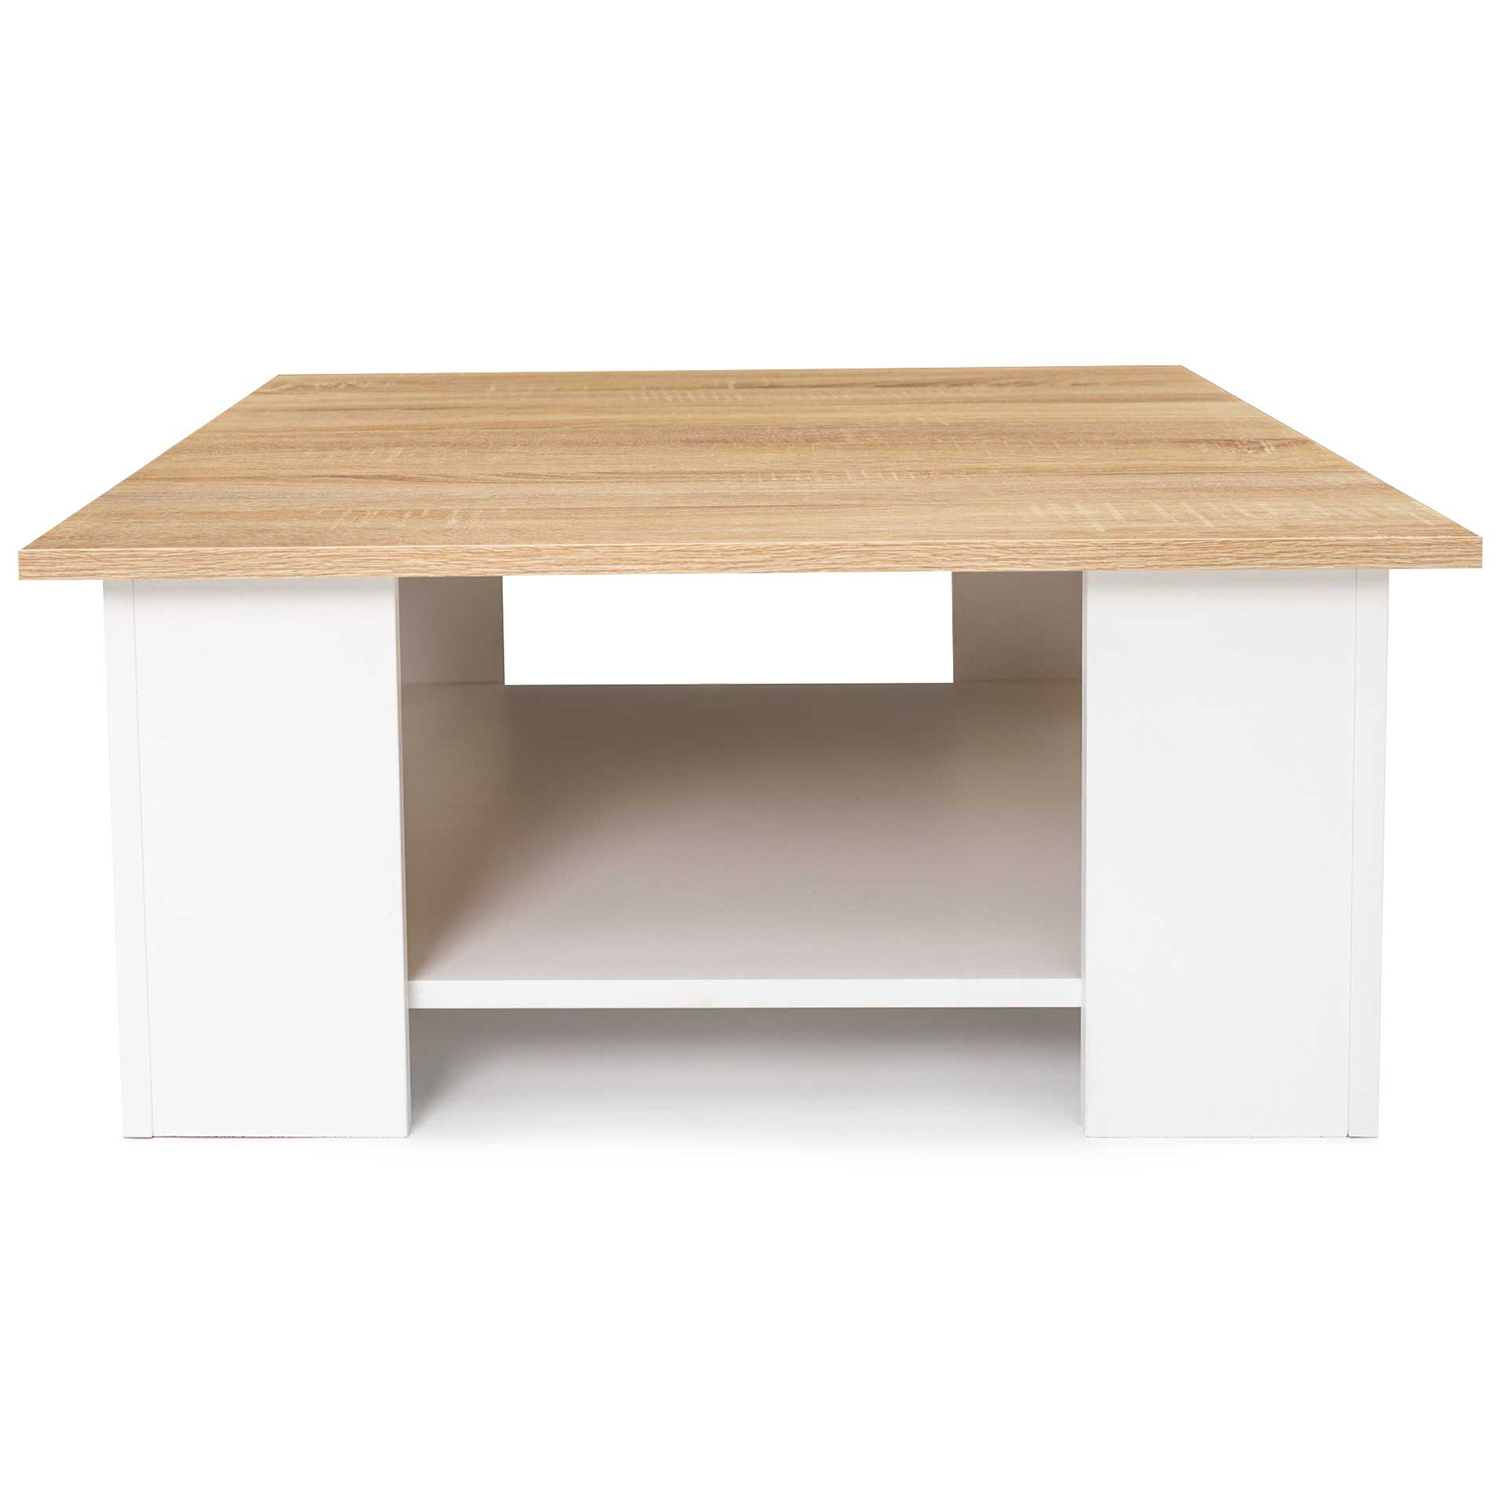 Petite table basse carrée Ema